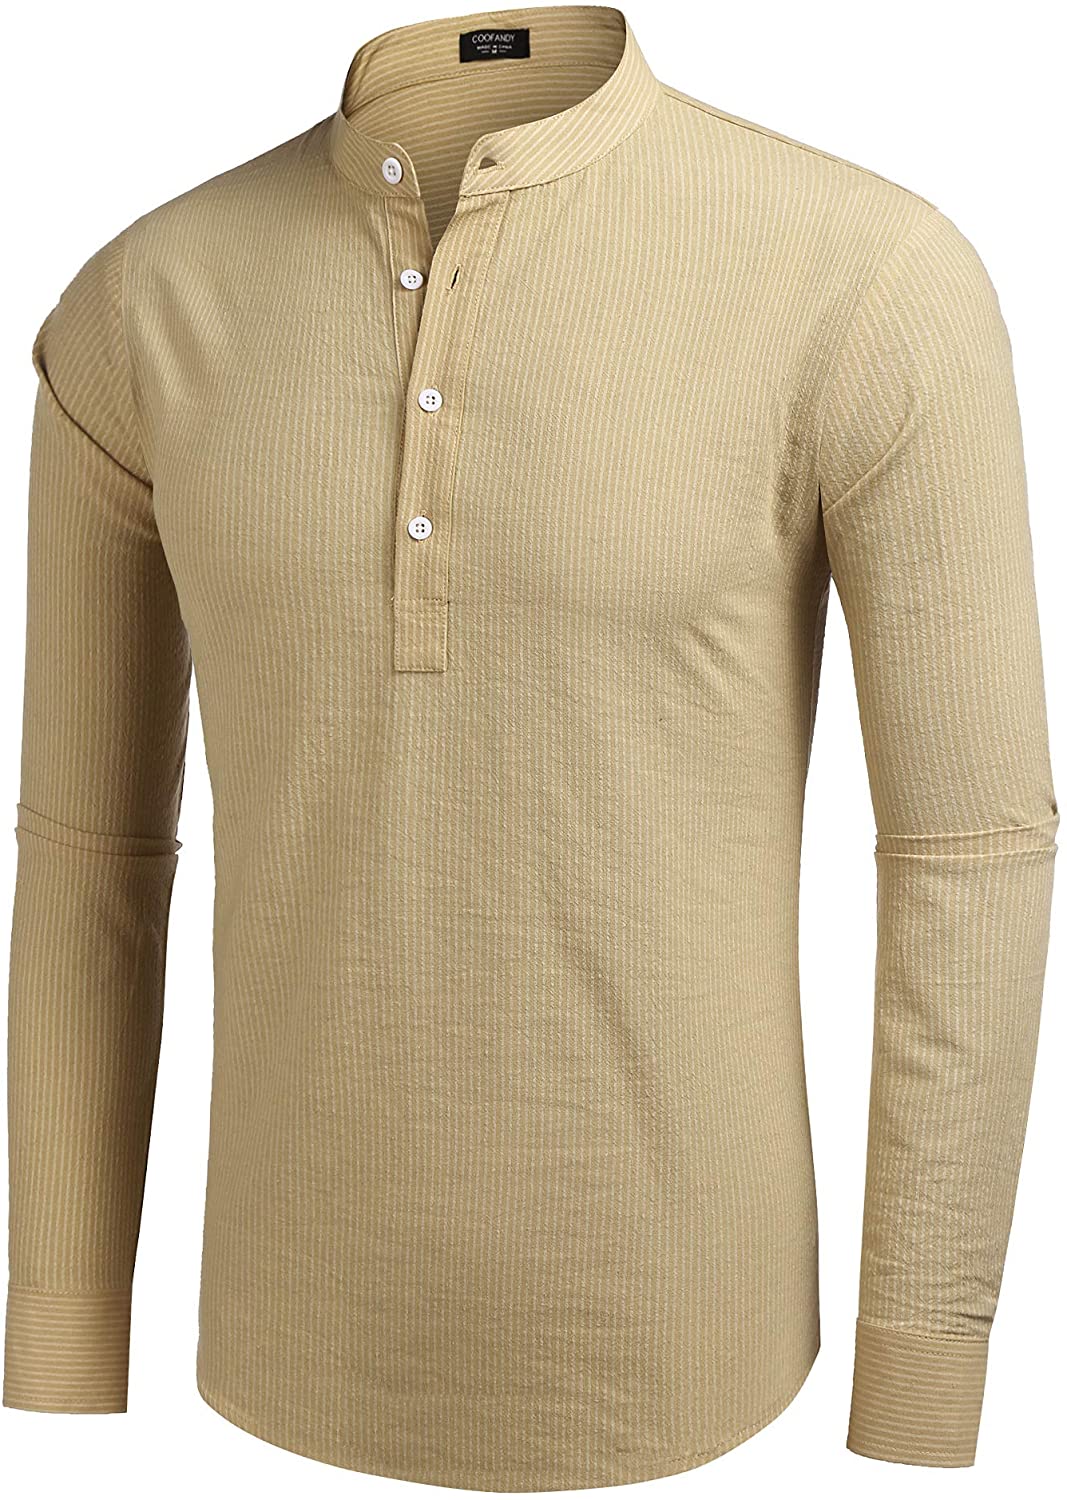 COOFANDY Men's Linen Henley Shirt Long Sleeve Casual Hippie Cotton ...